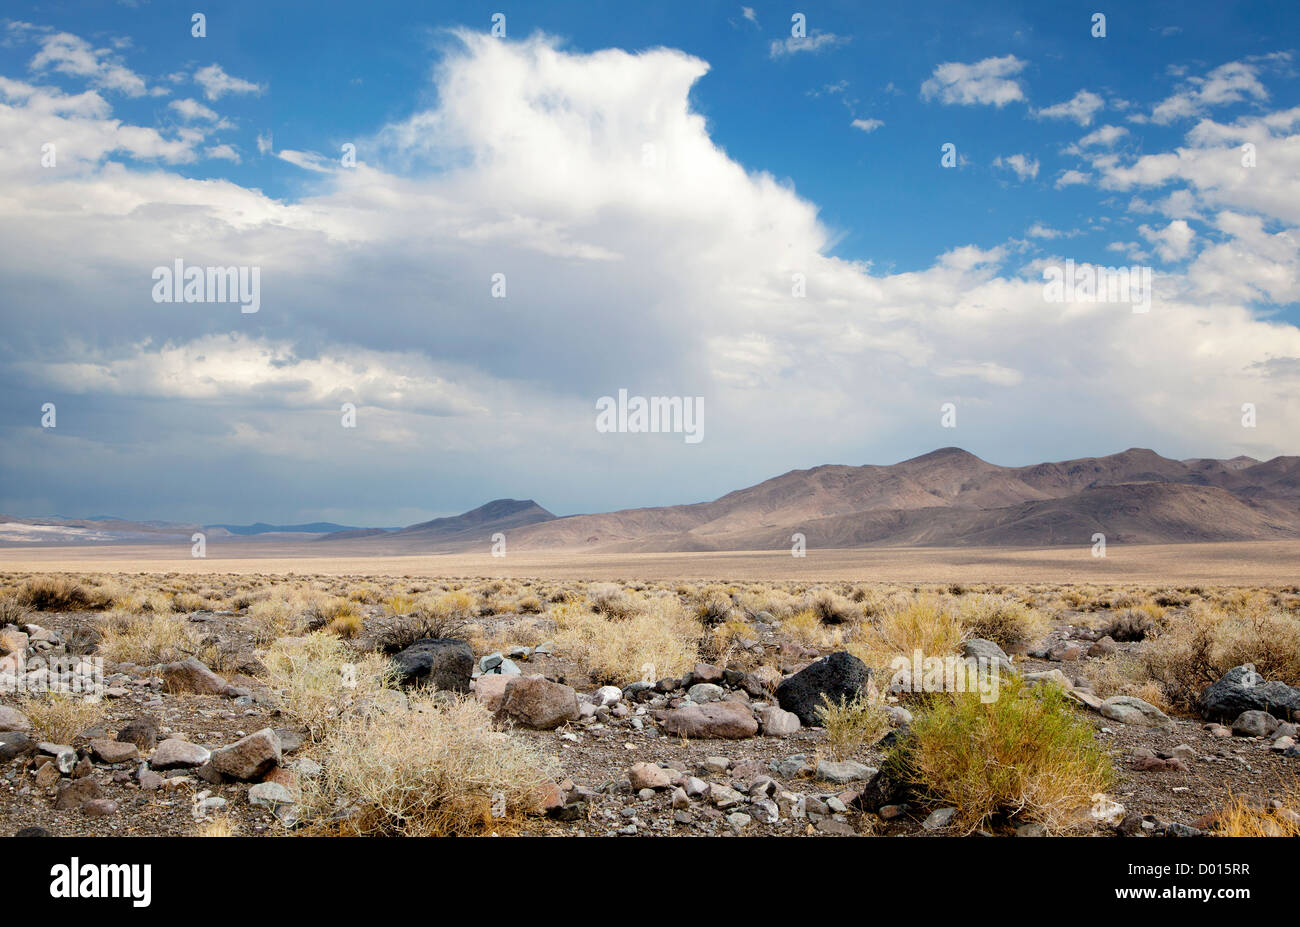 Mopung Hills in the Nevada desert. Stock Photo